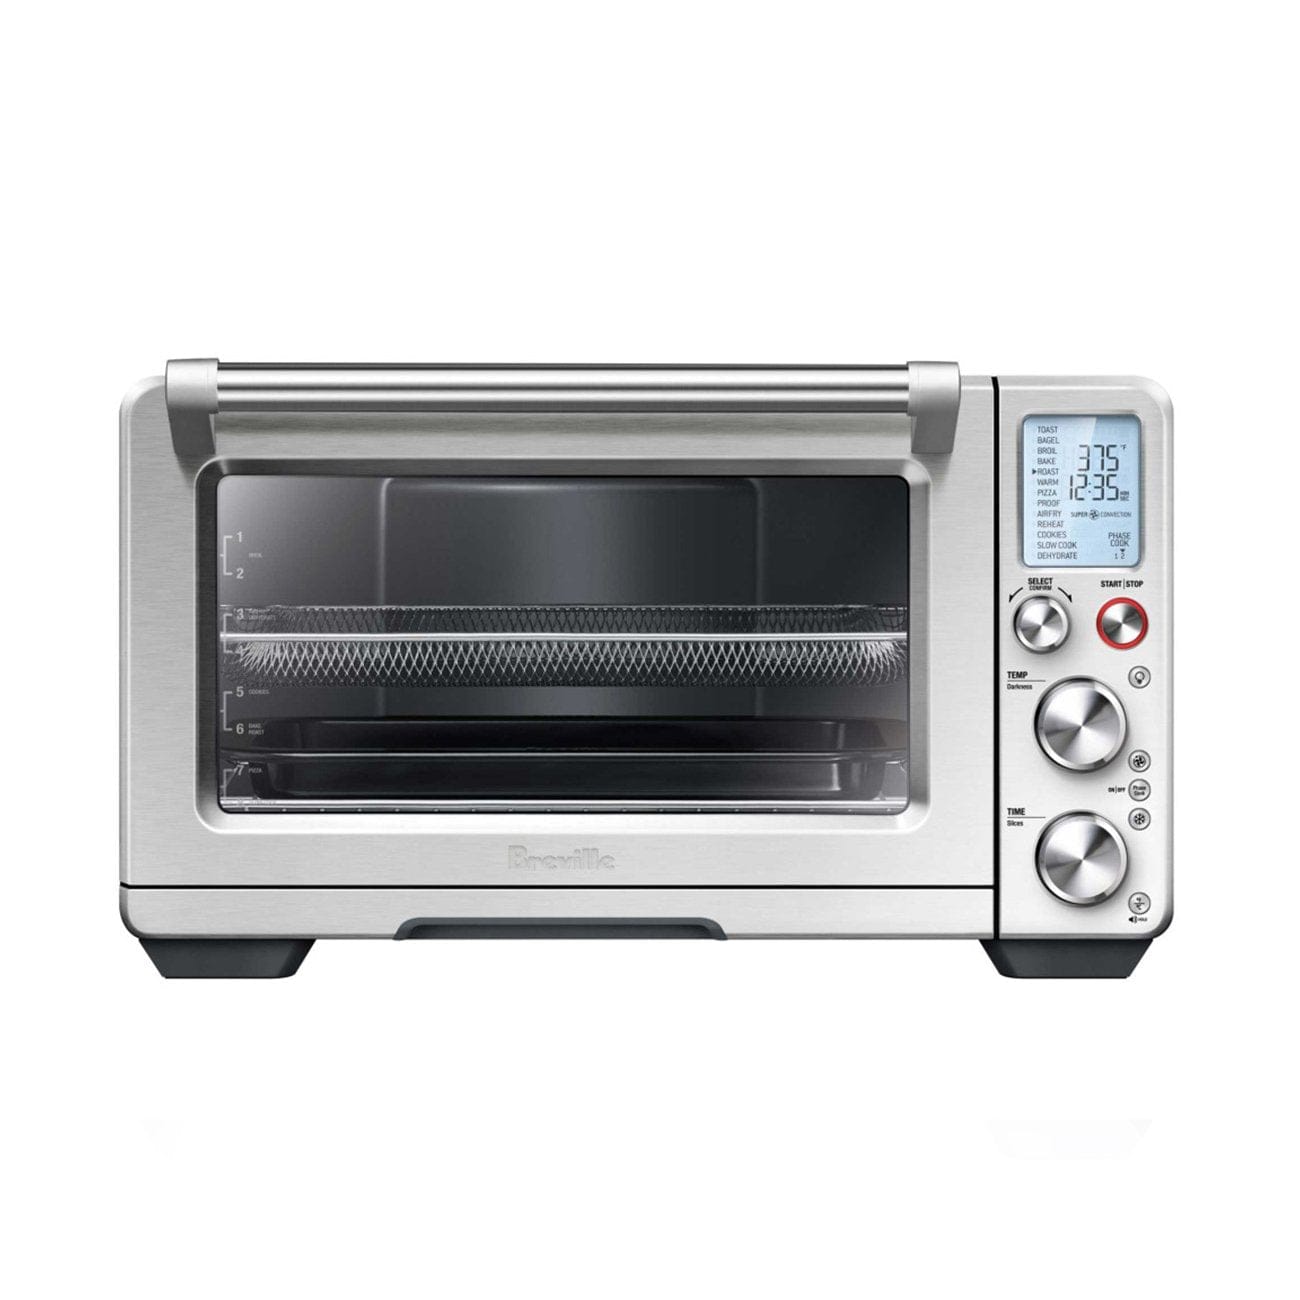 Breville Toasters & Ovens Breville Smart Oven Air Fryer Pro